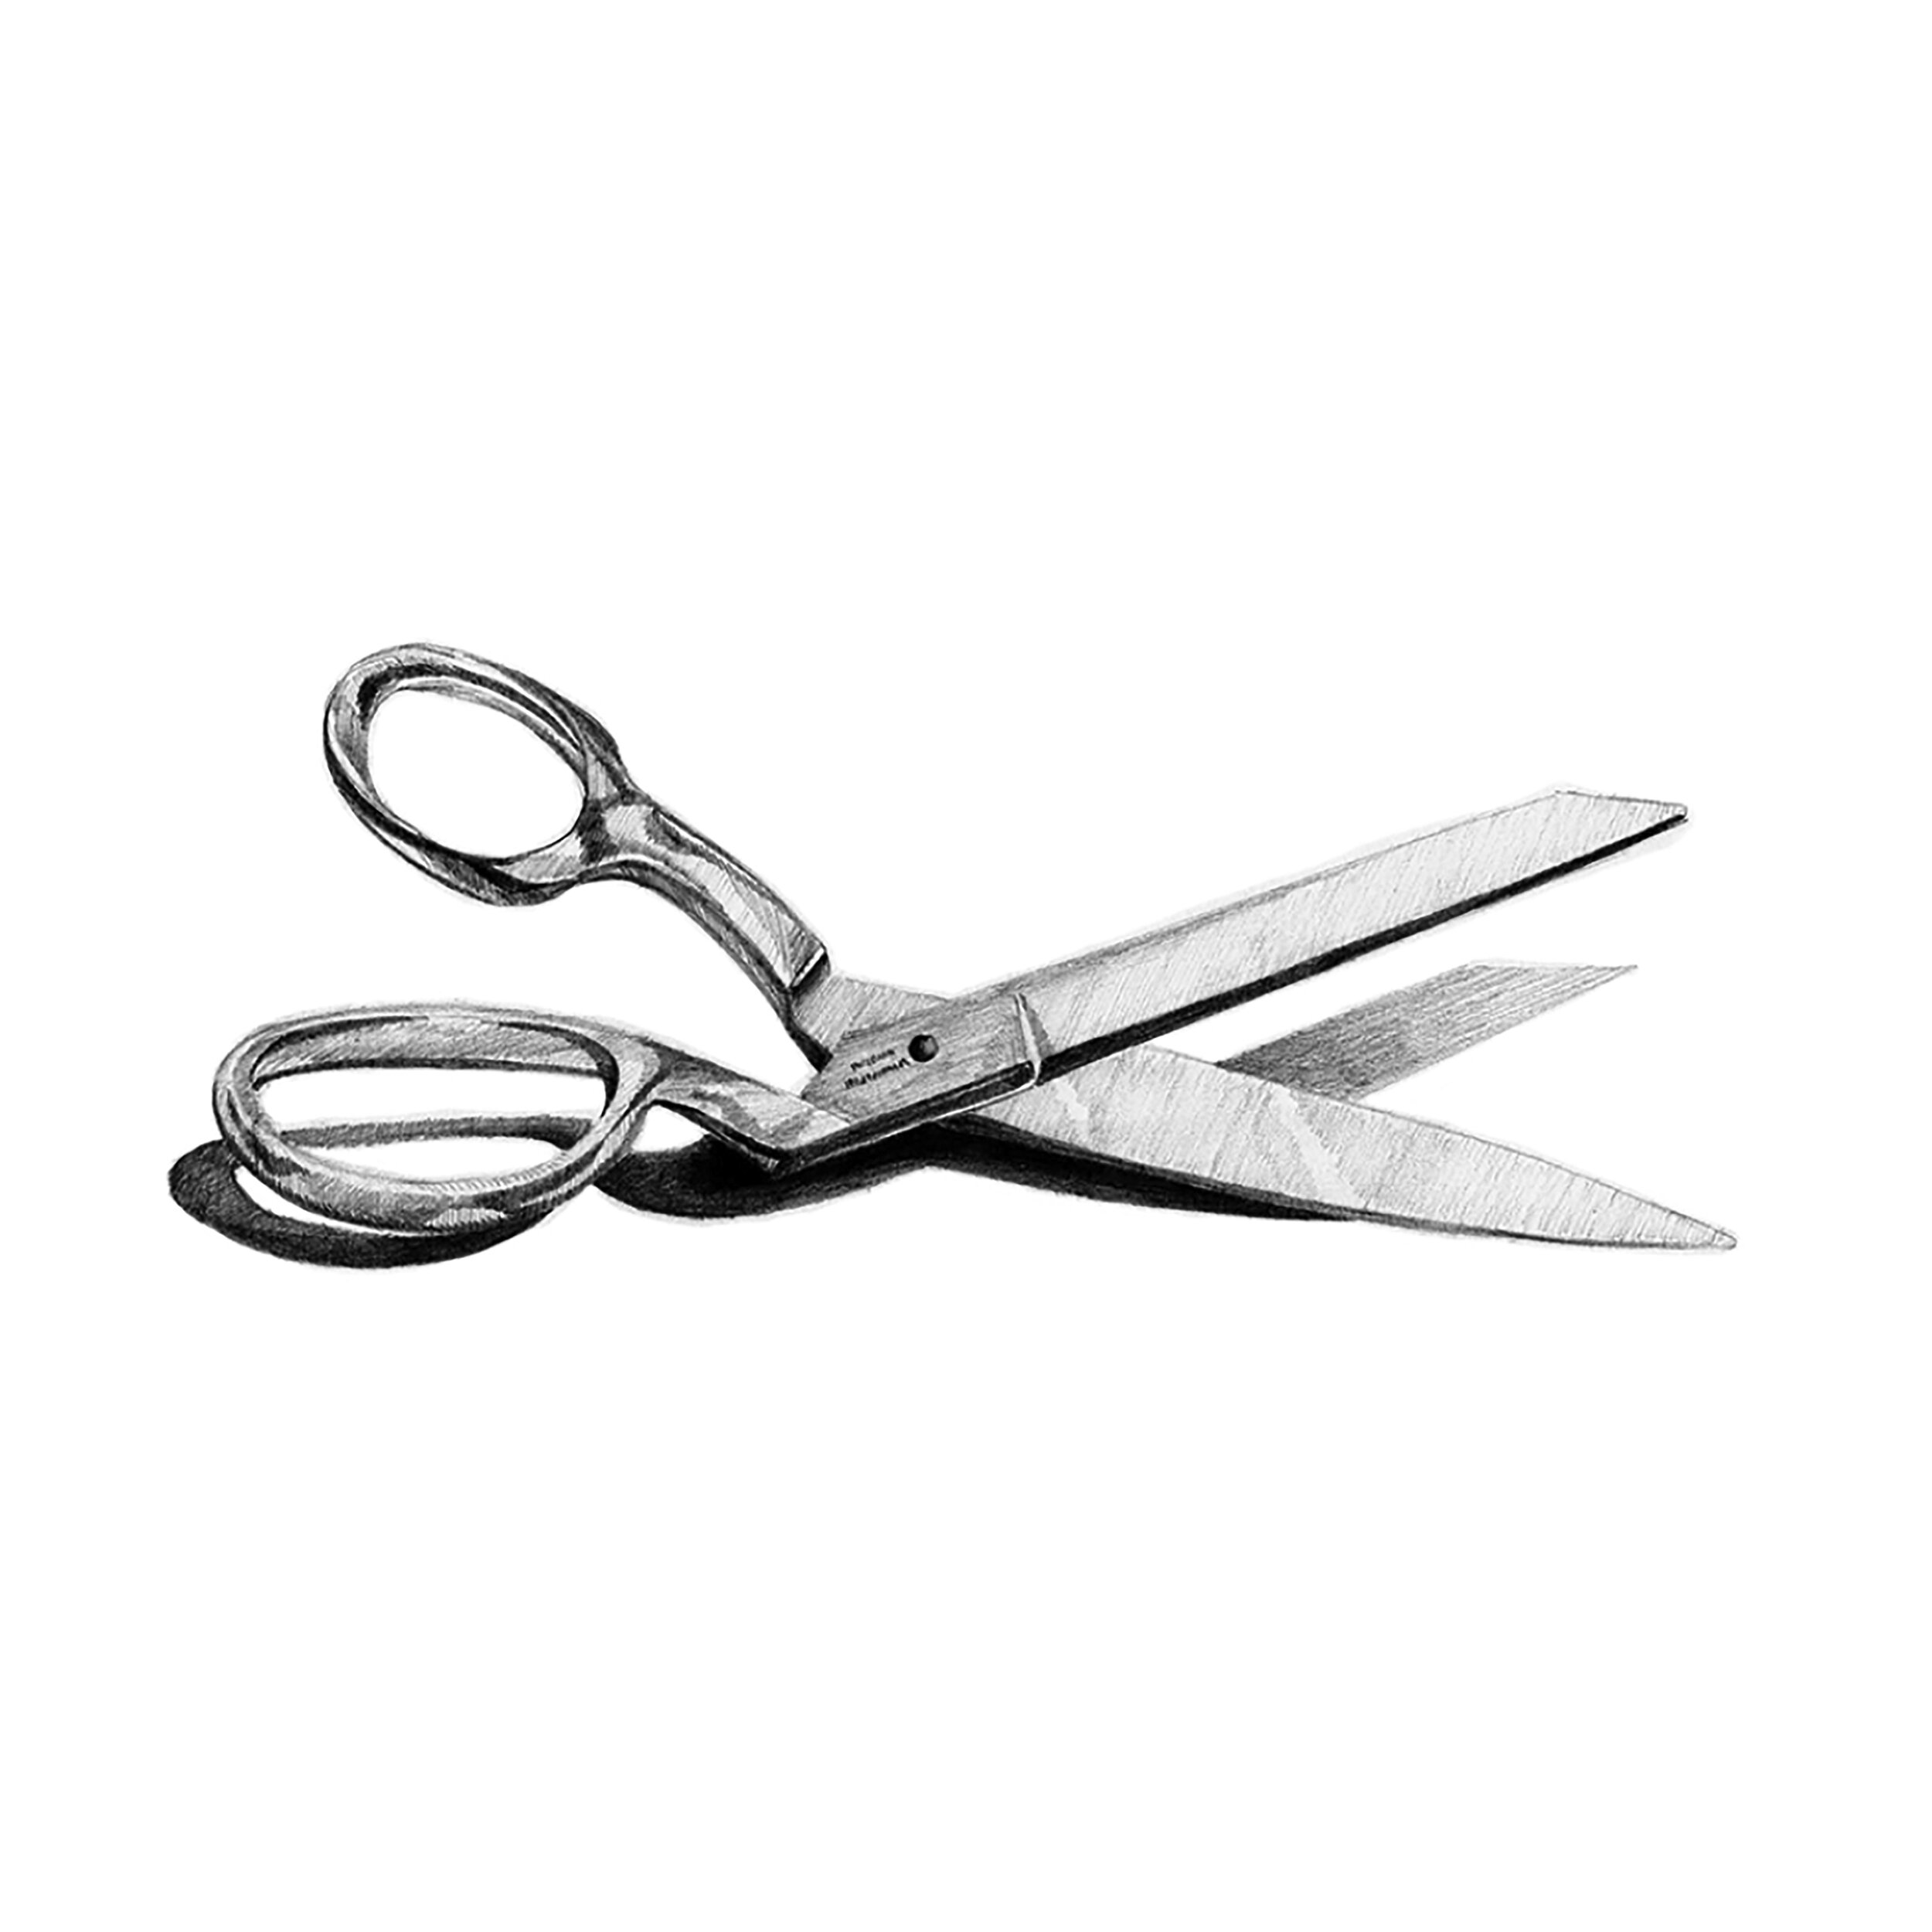 scissors.jpg